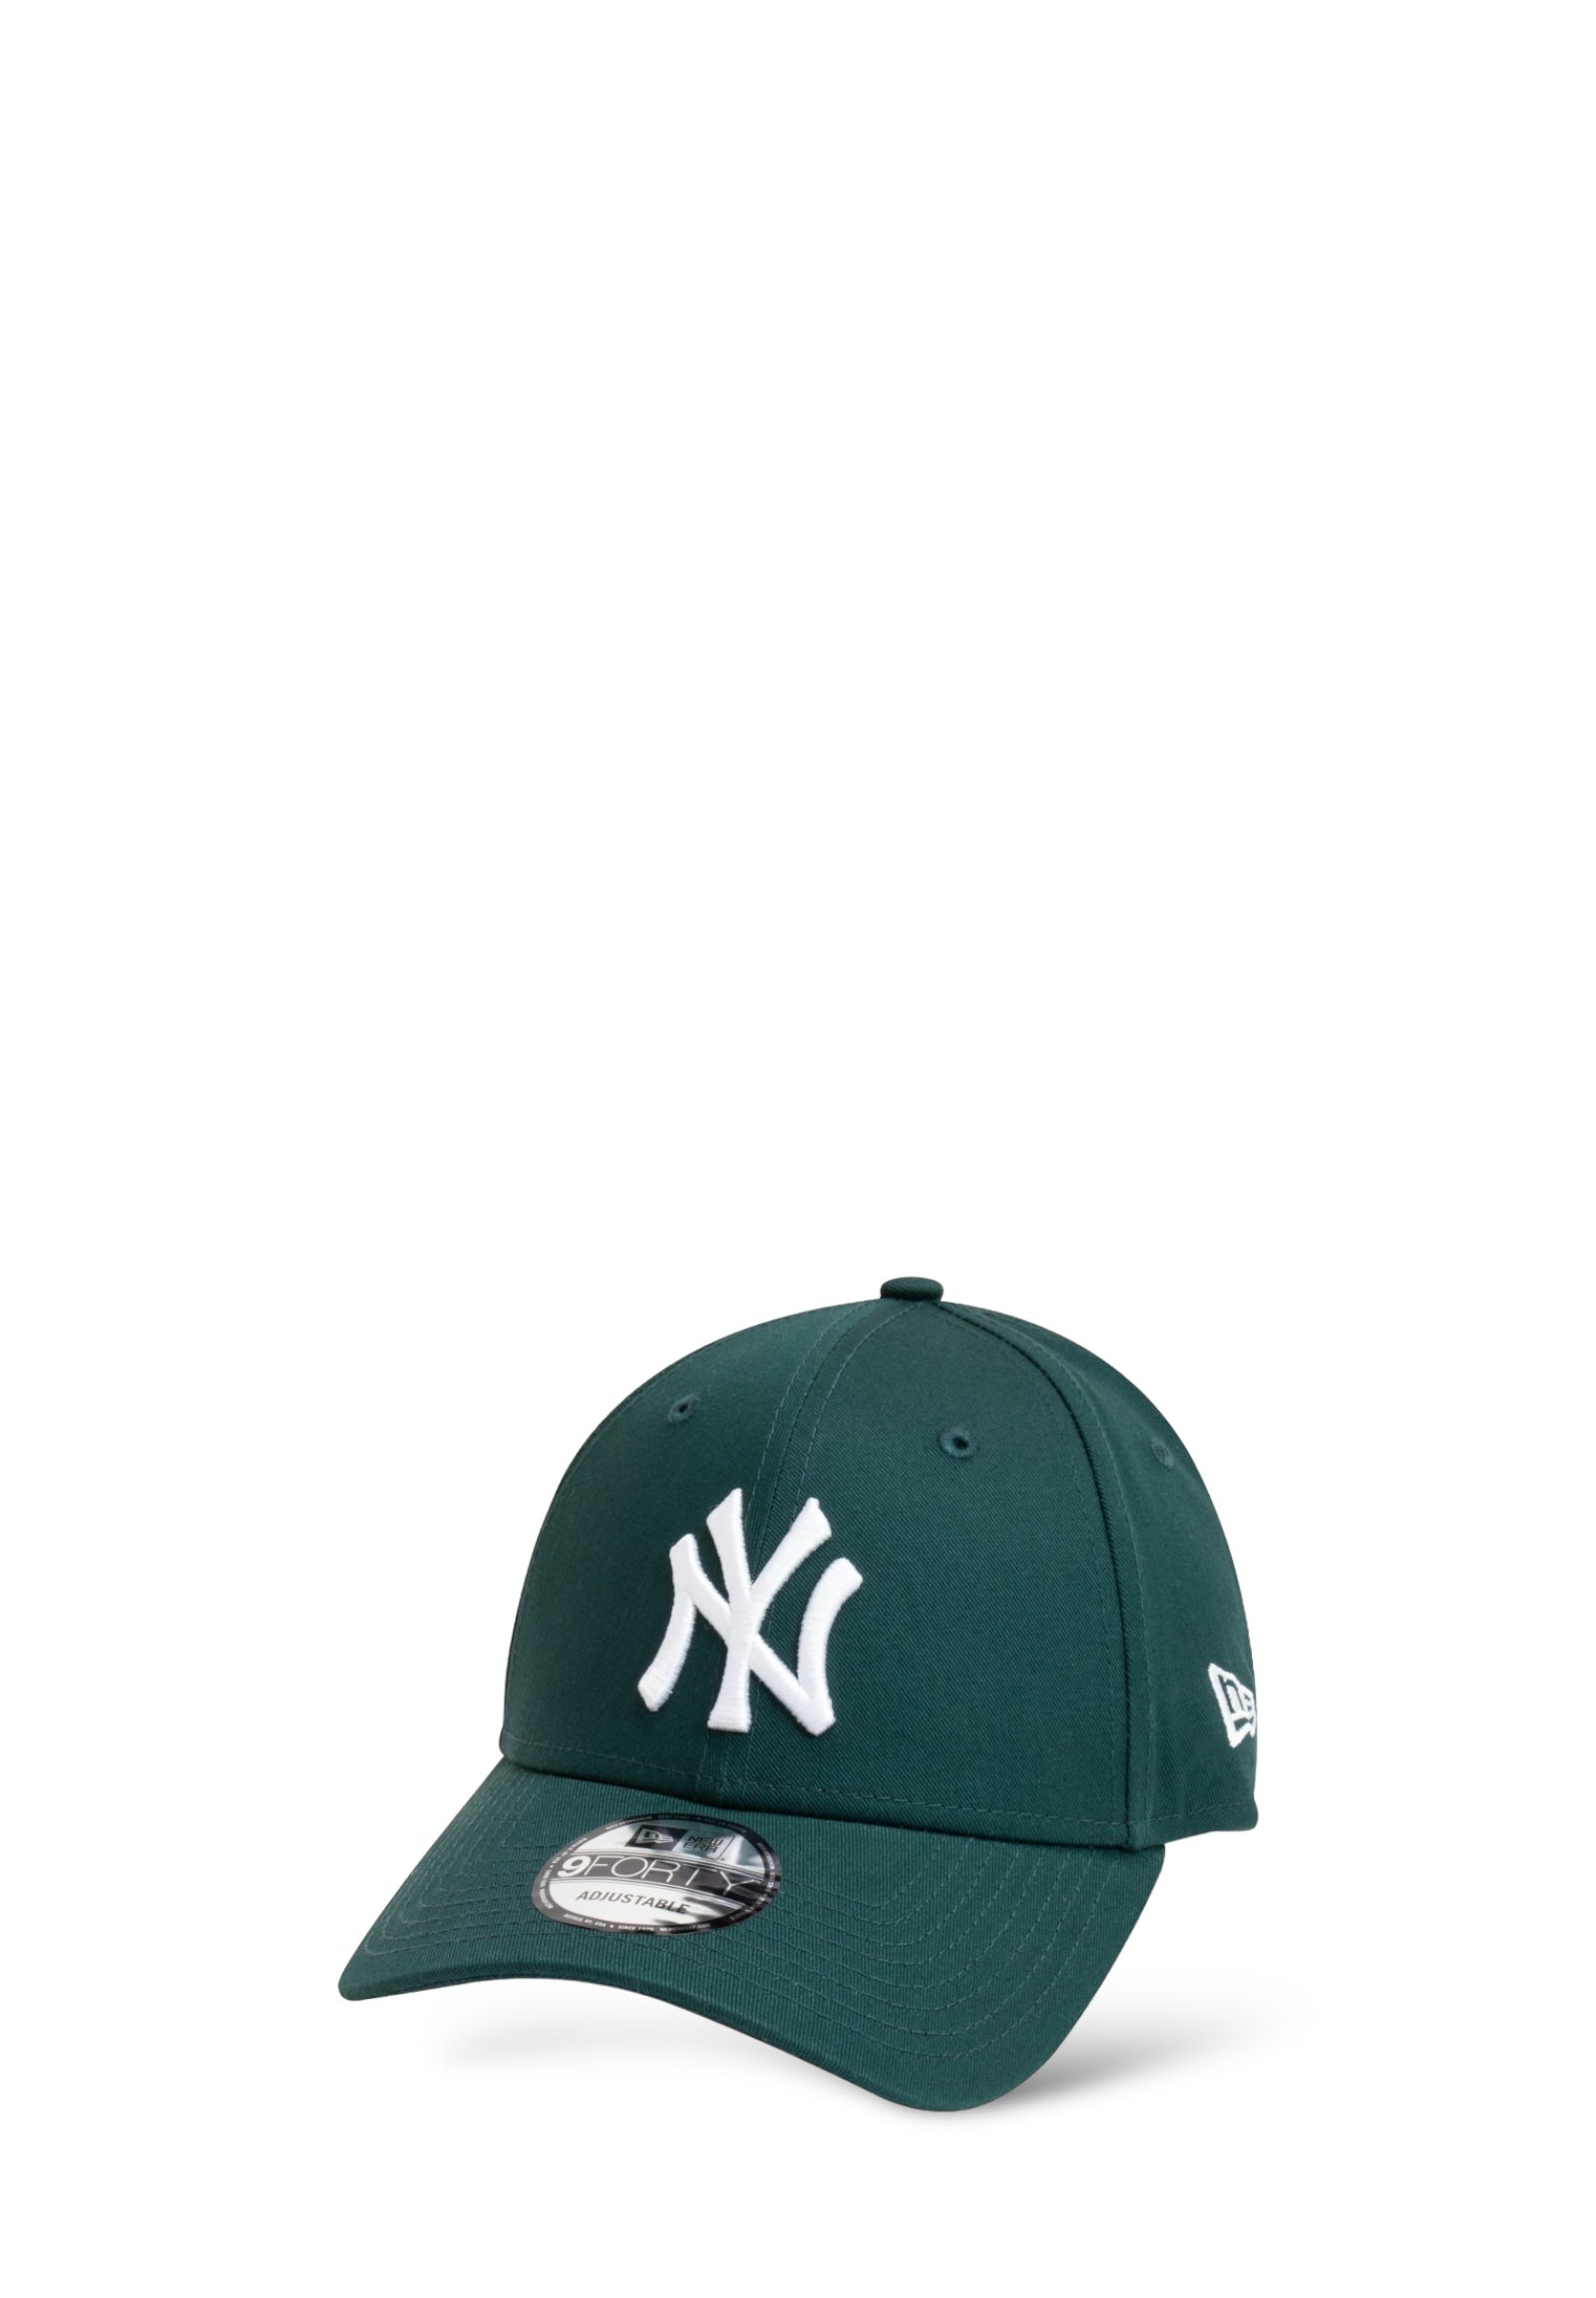 Cappello Da Baseball 60471456 Dark Green